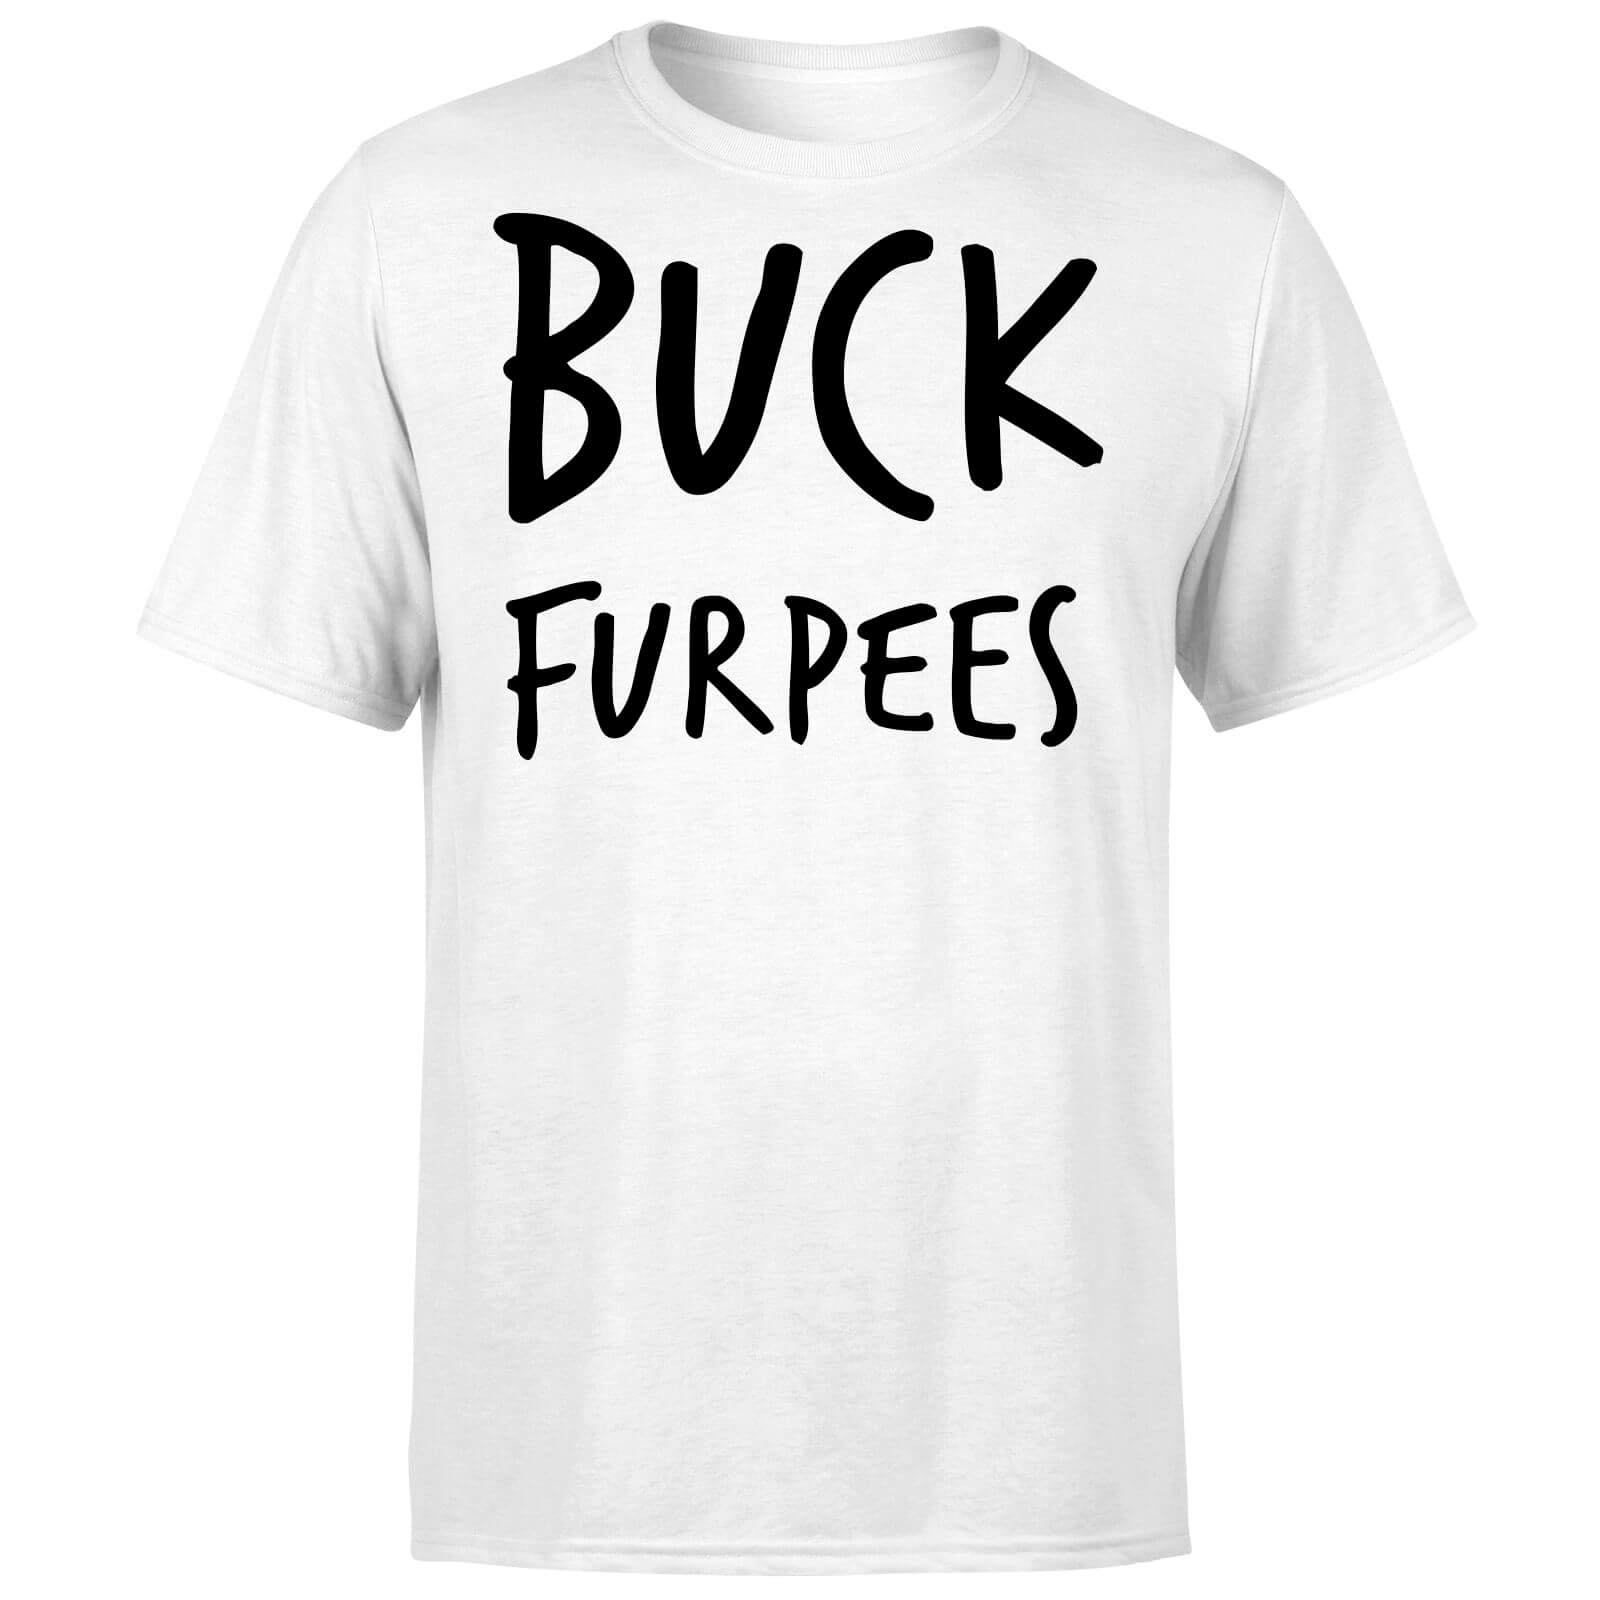 Buck Furpees T-Shirt - White - S - White